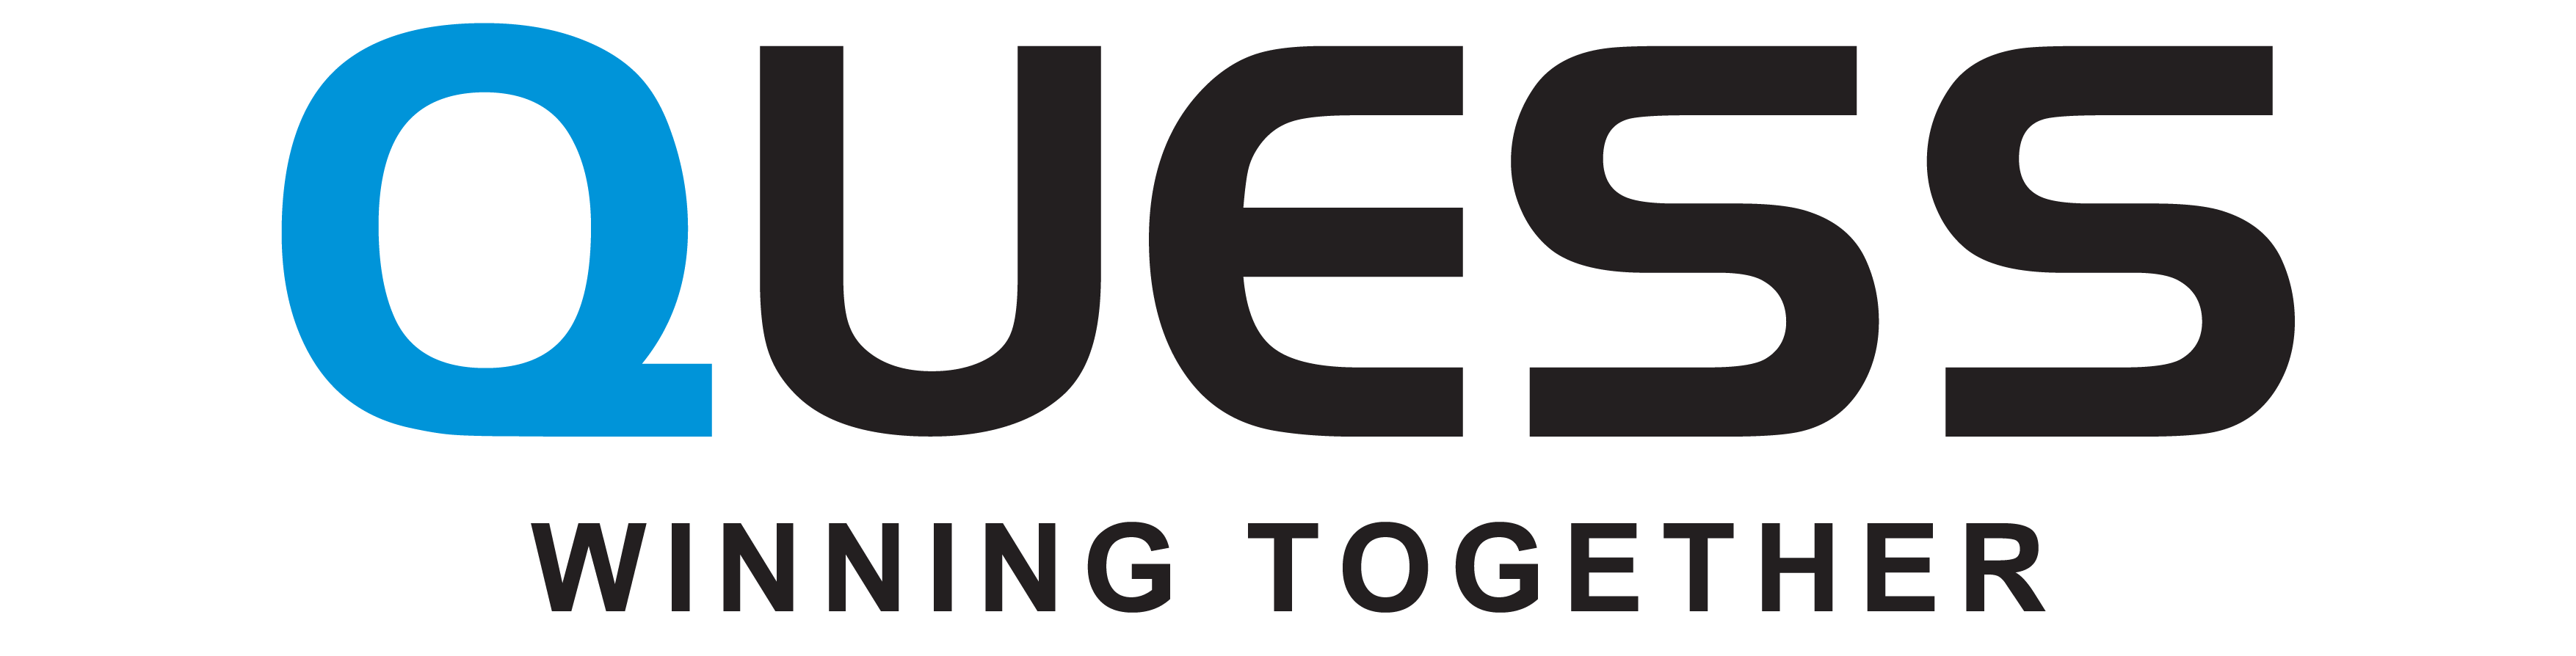 Quess-logo_winning-together-02-e1576663667658